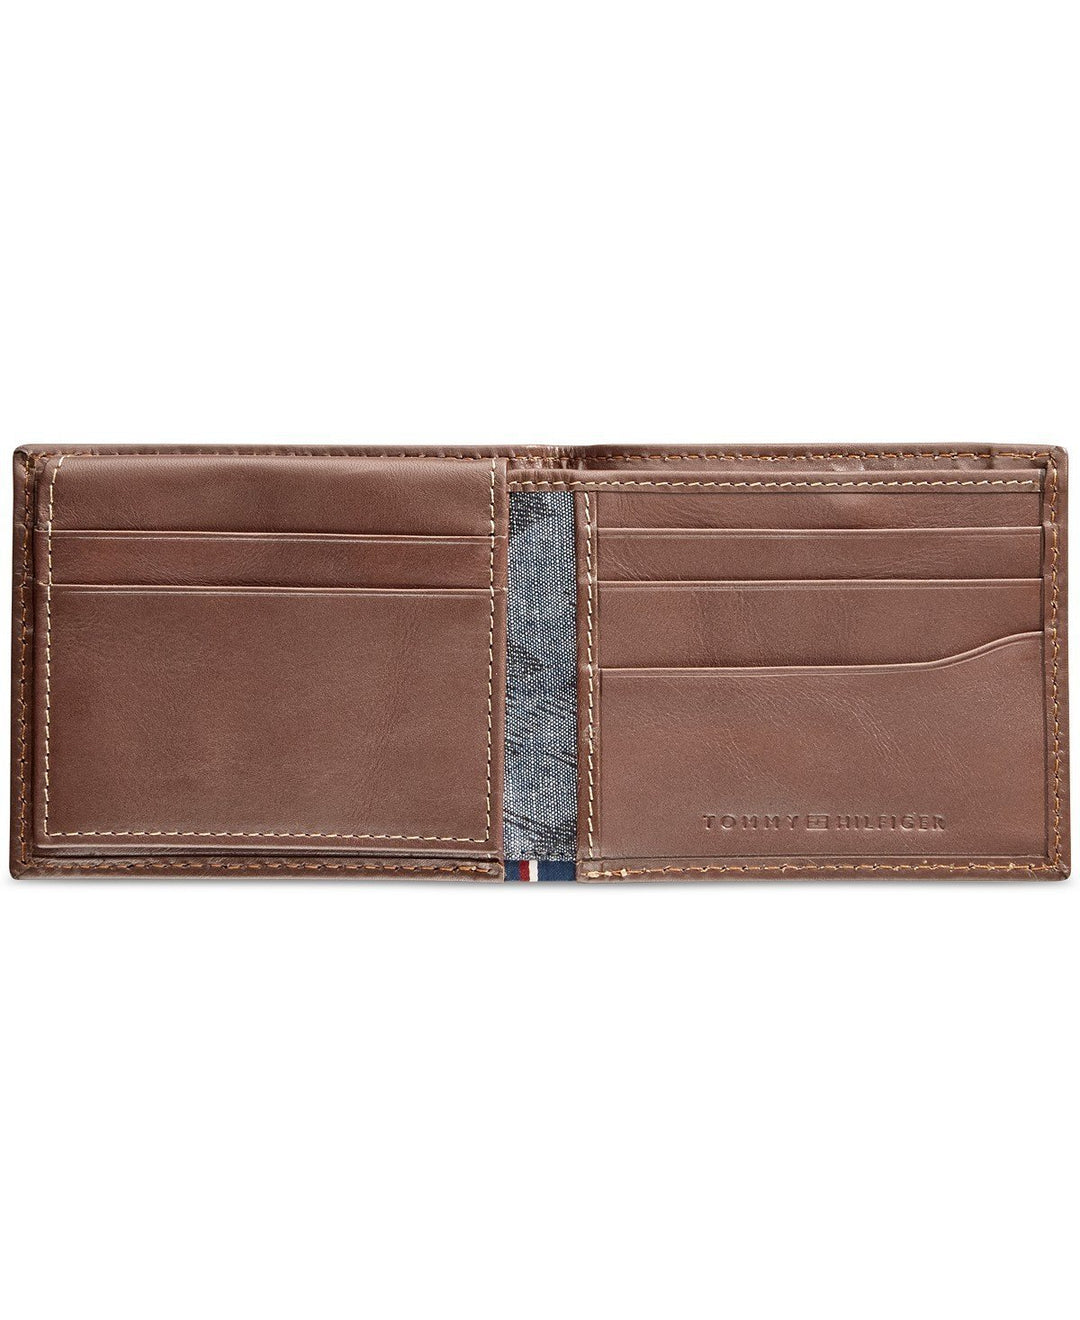 Tommy Hilfiger Men's Leather Wallet – 31TL220055, Tan